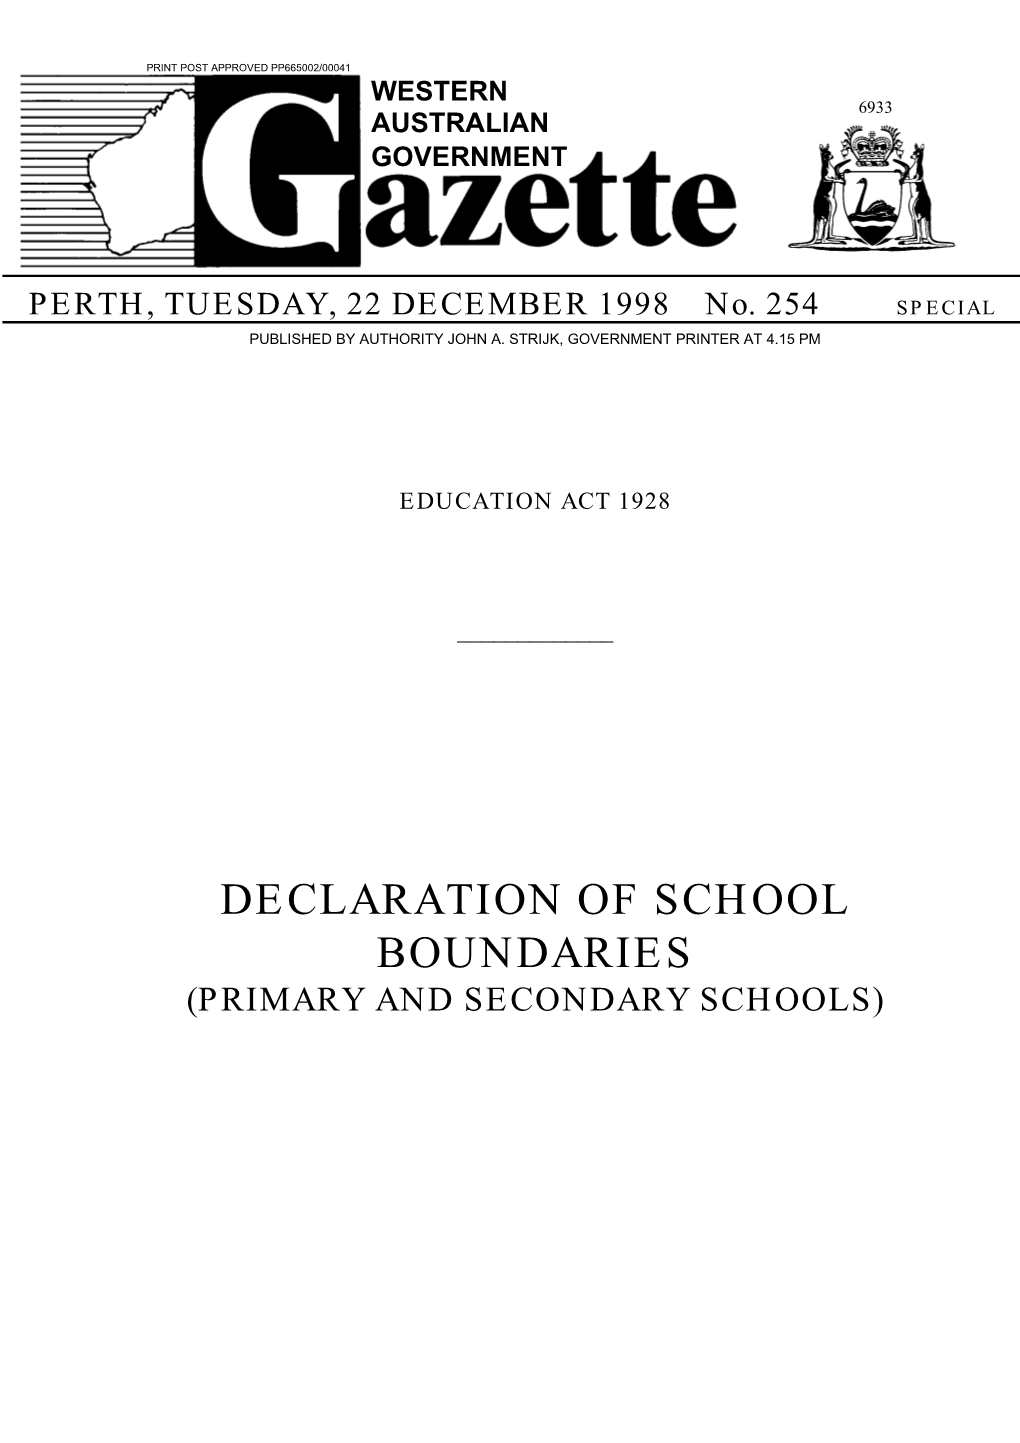 DECLARATION of SCHOOL BOUNDARIES (PRIMARY and SECONDARY SCHOOLS) 6934 GOVERNMENT GAZETTE, WA [22 December 1998 22 December 1998] GOVERNMENT GAZETTE, WA 6935